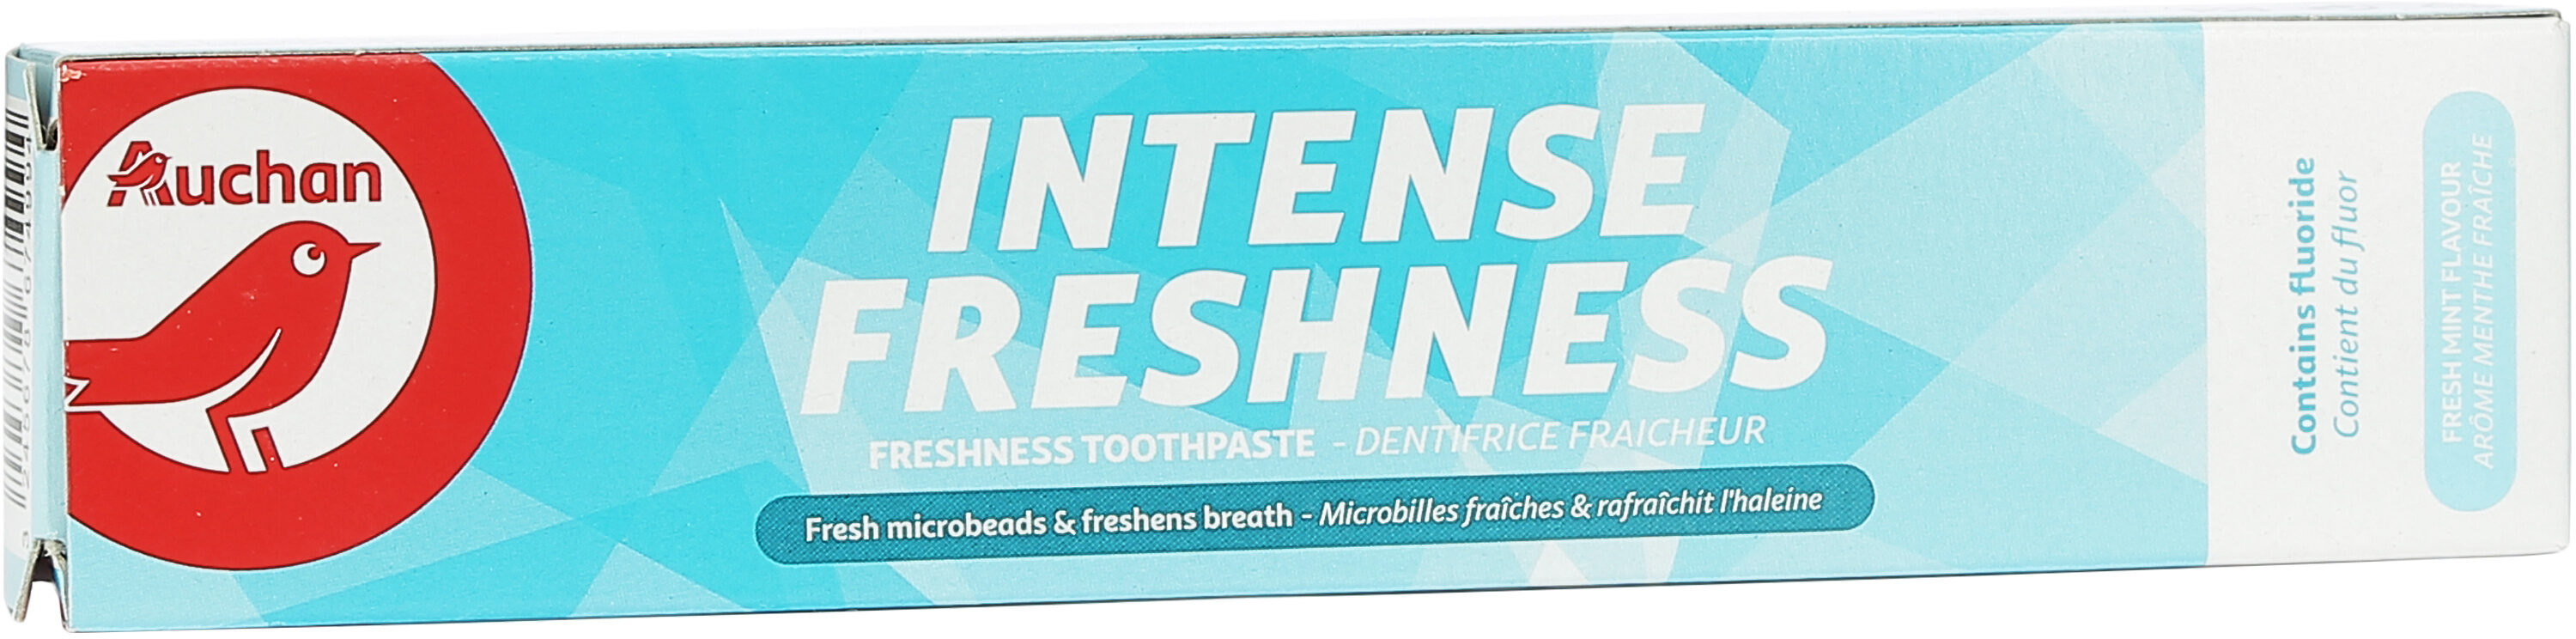 Auchan - dentifrice - fraicheur intense - 75ml - Продукт - fr